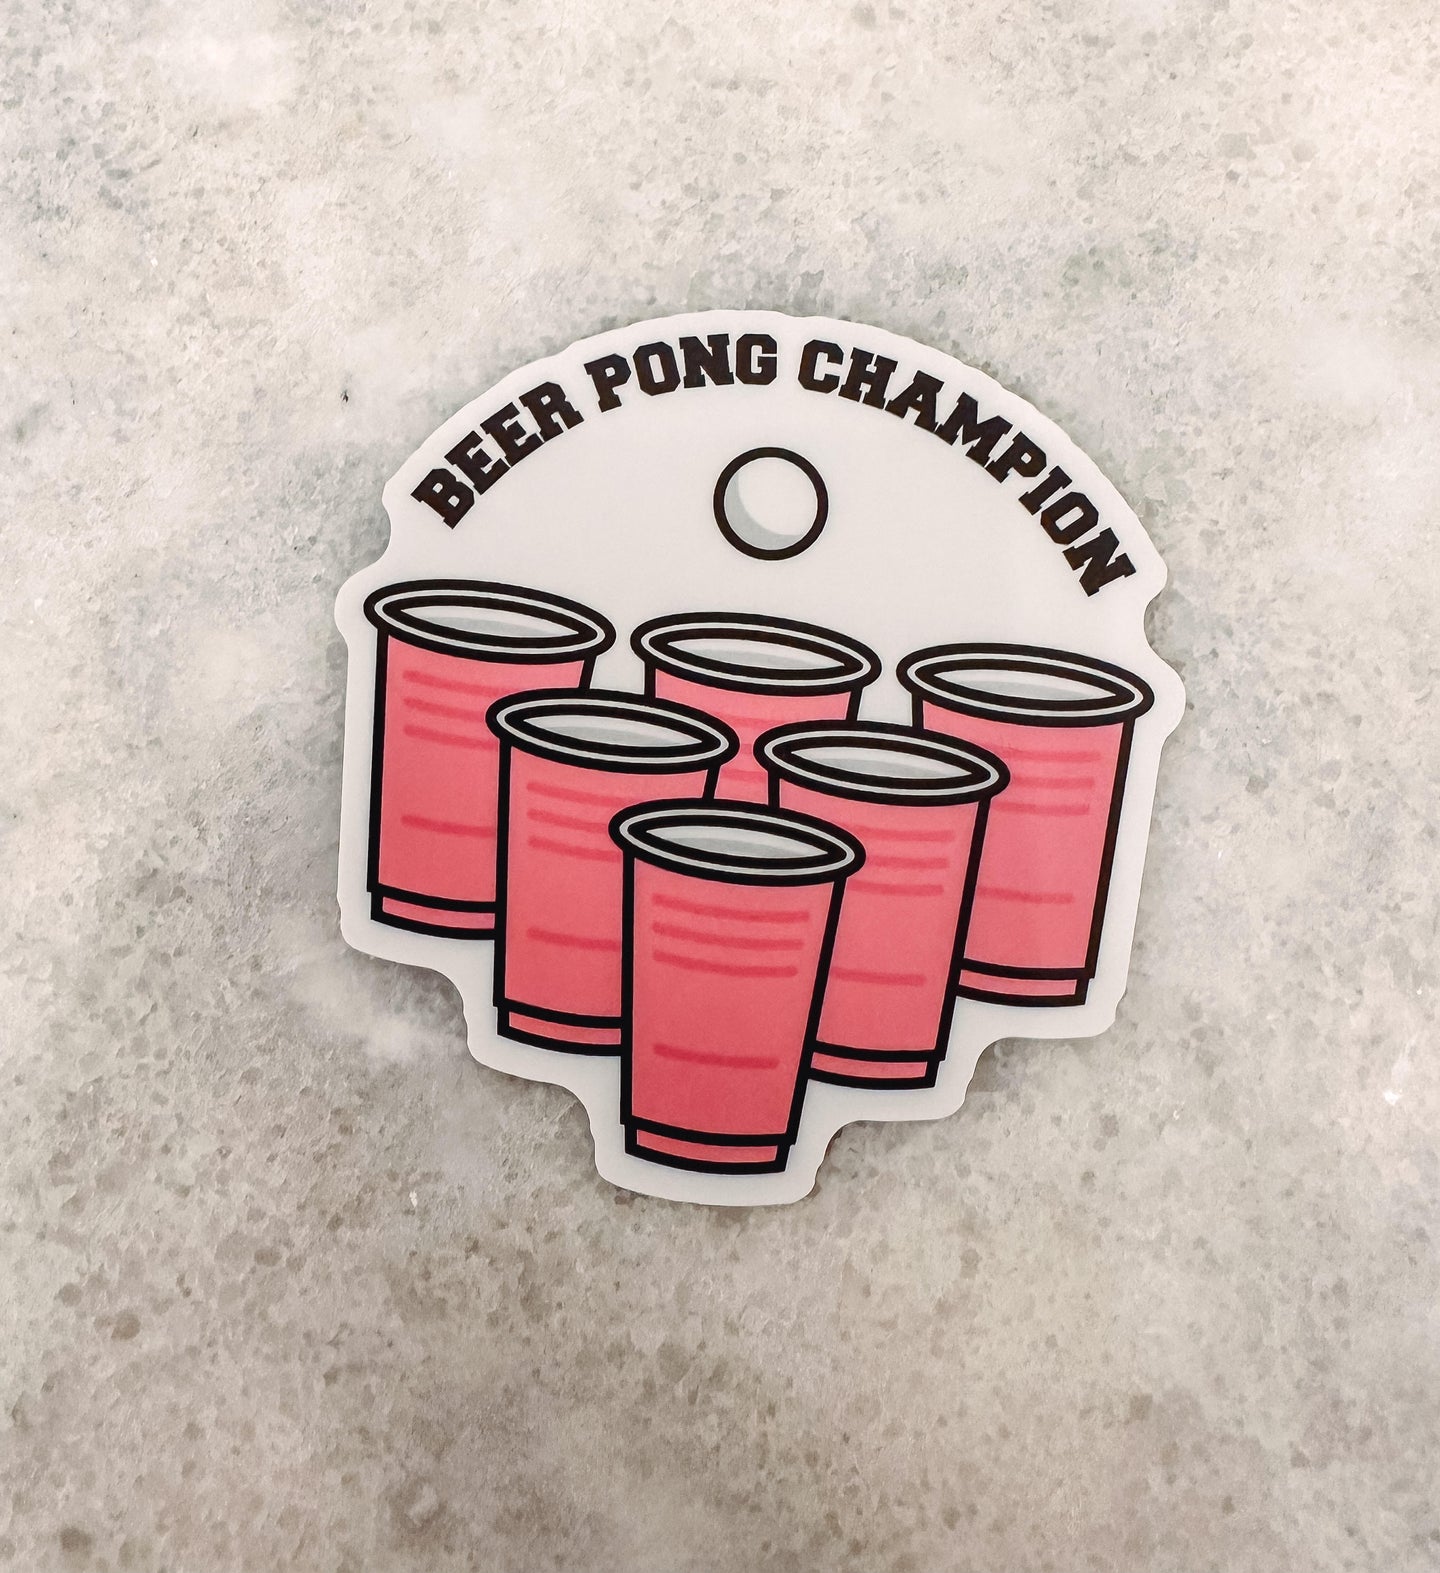 Name Drop | Beer Pong Champion Sticker